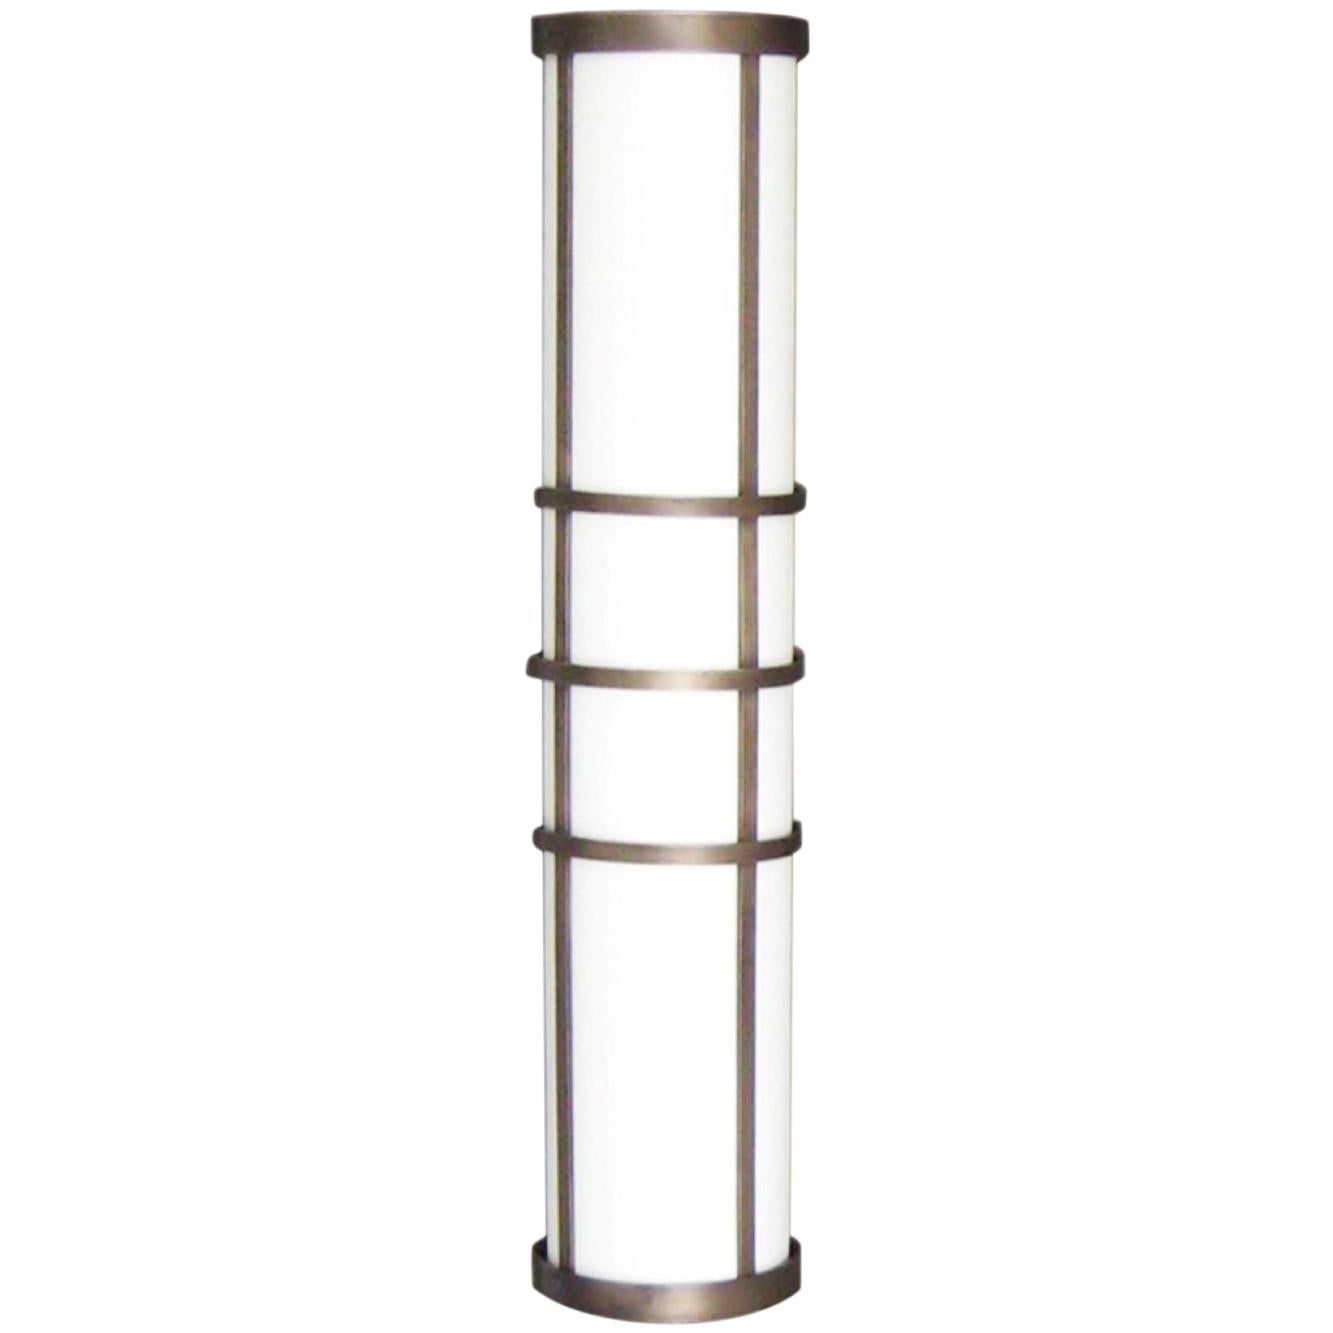 The Moderns Wall Fixture Cylinder Linen and Brass Created (Applique cylindrique moderne en lin et laiton)   en vente